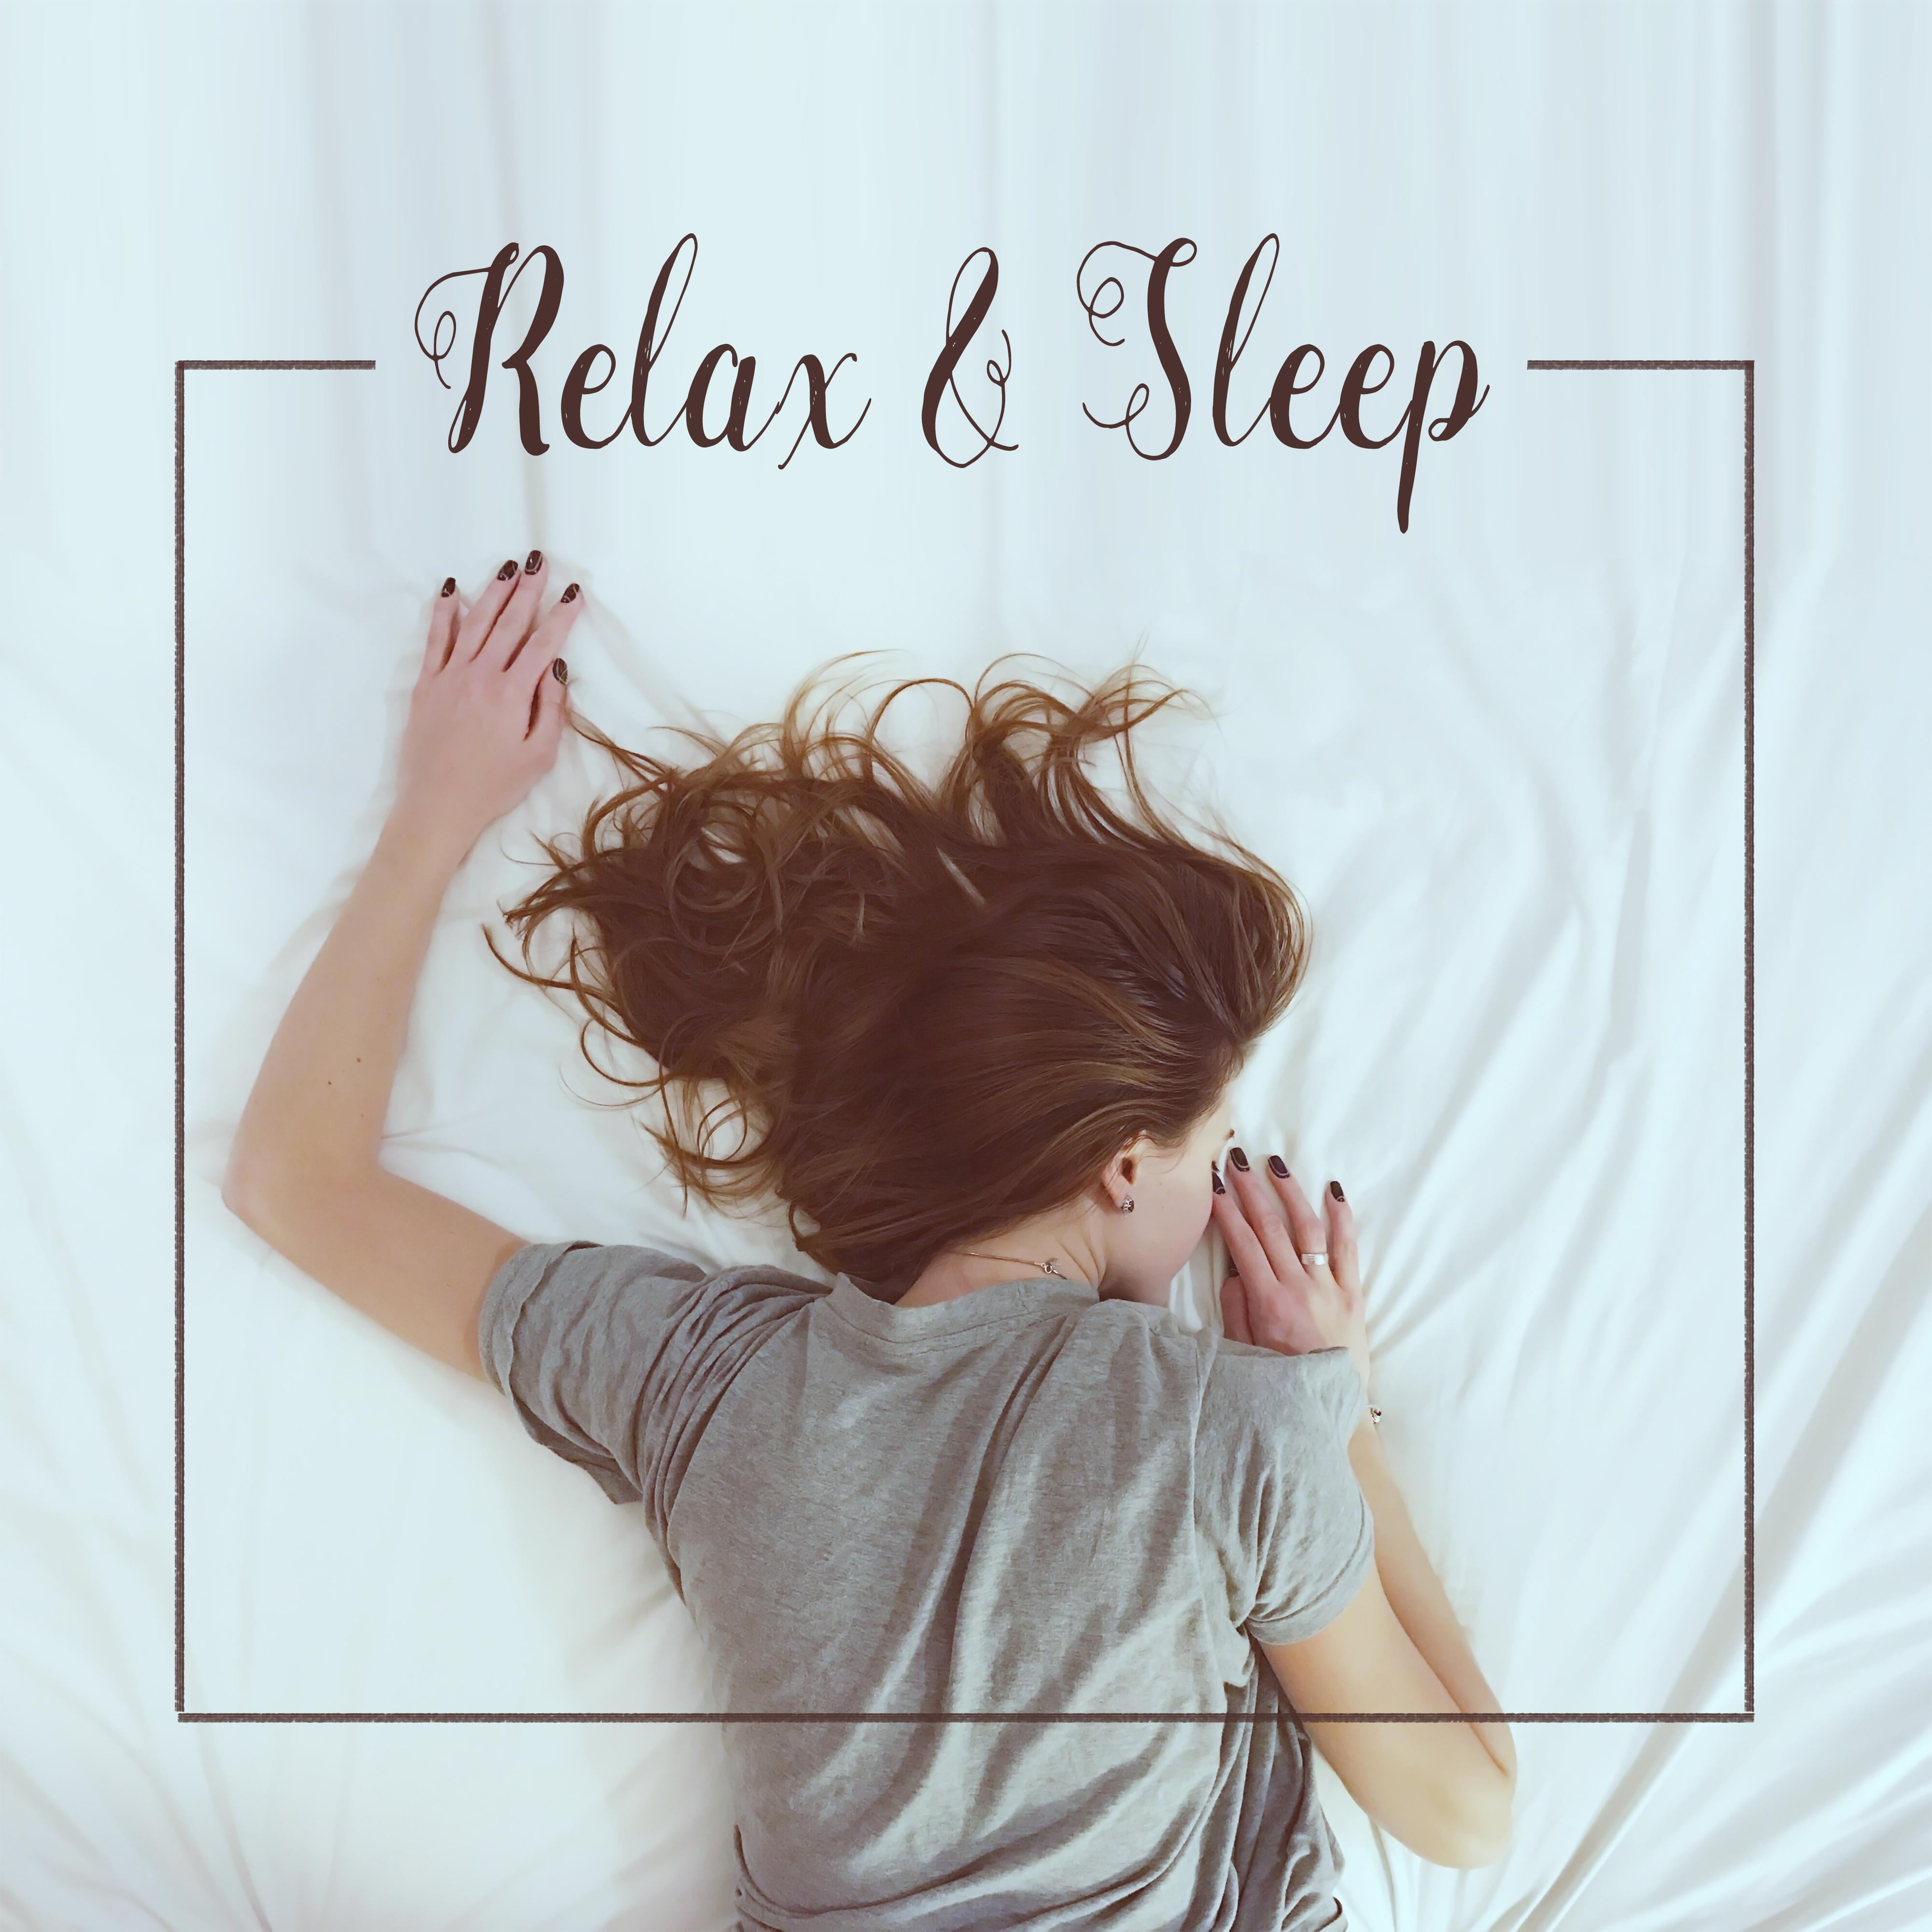 Relax & Sleep – Peaceful Nature Sounds, Sleep, Meditation, Zen, Rest, Harmony, New Age 2017